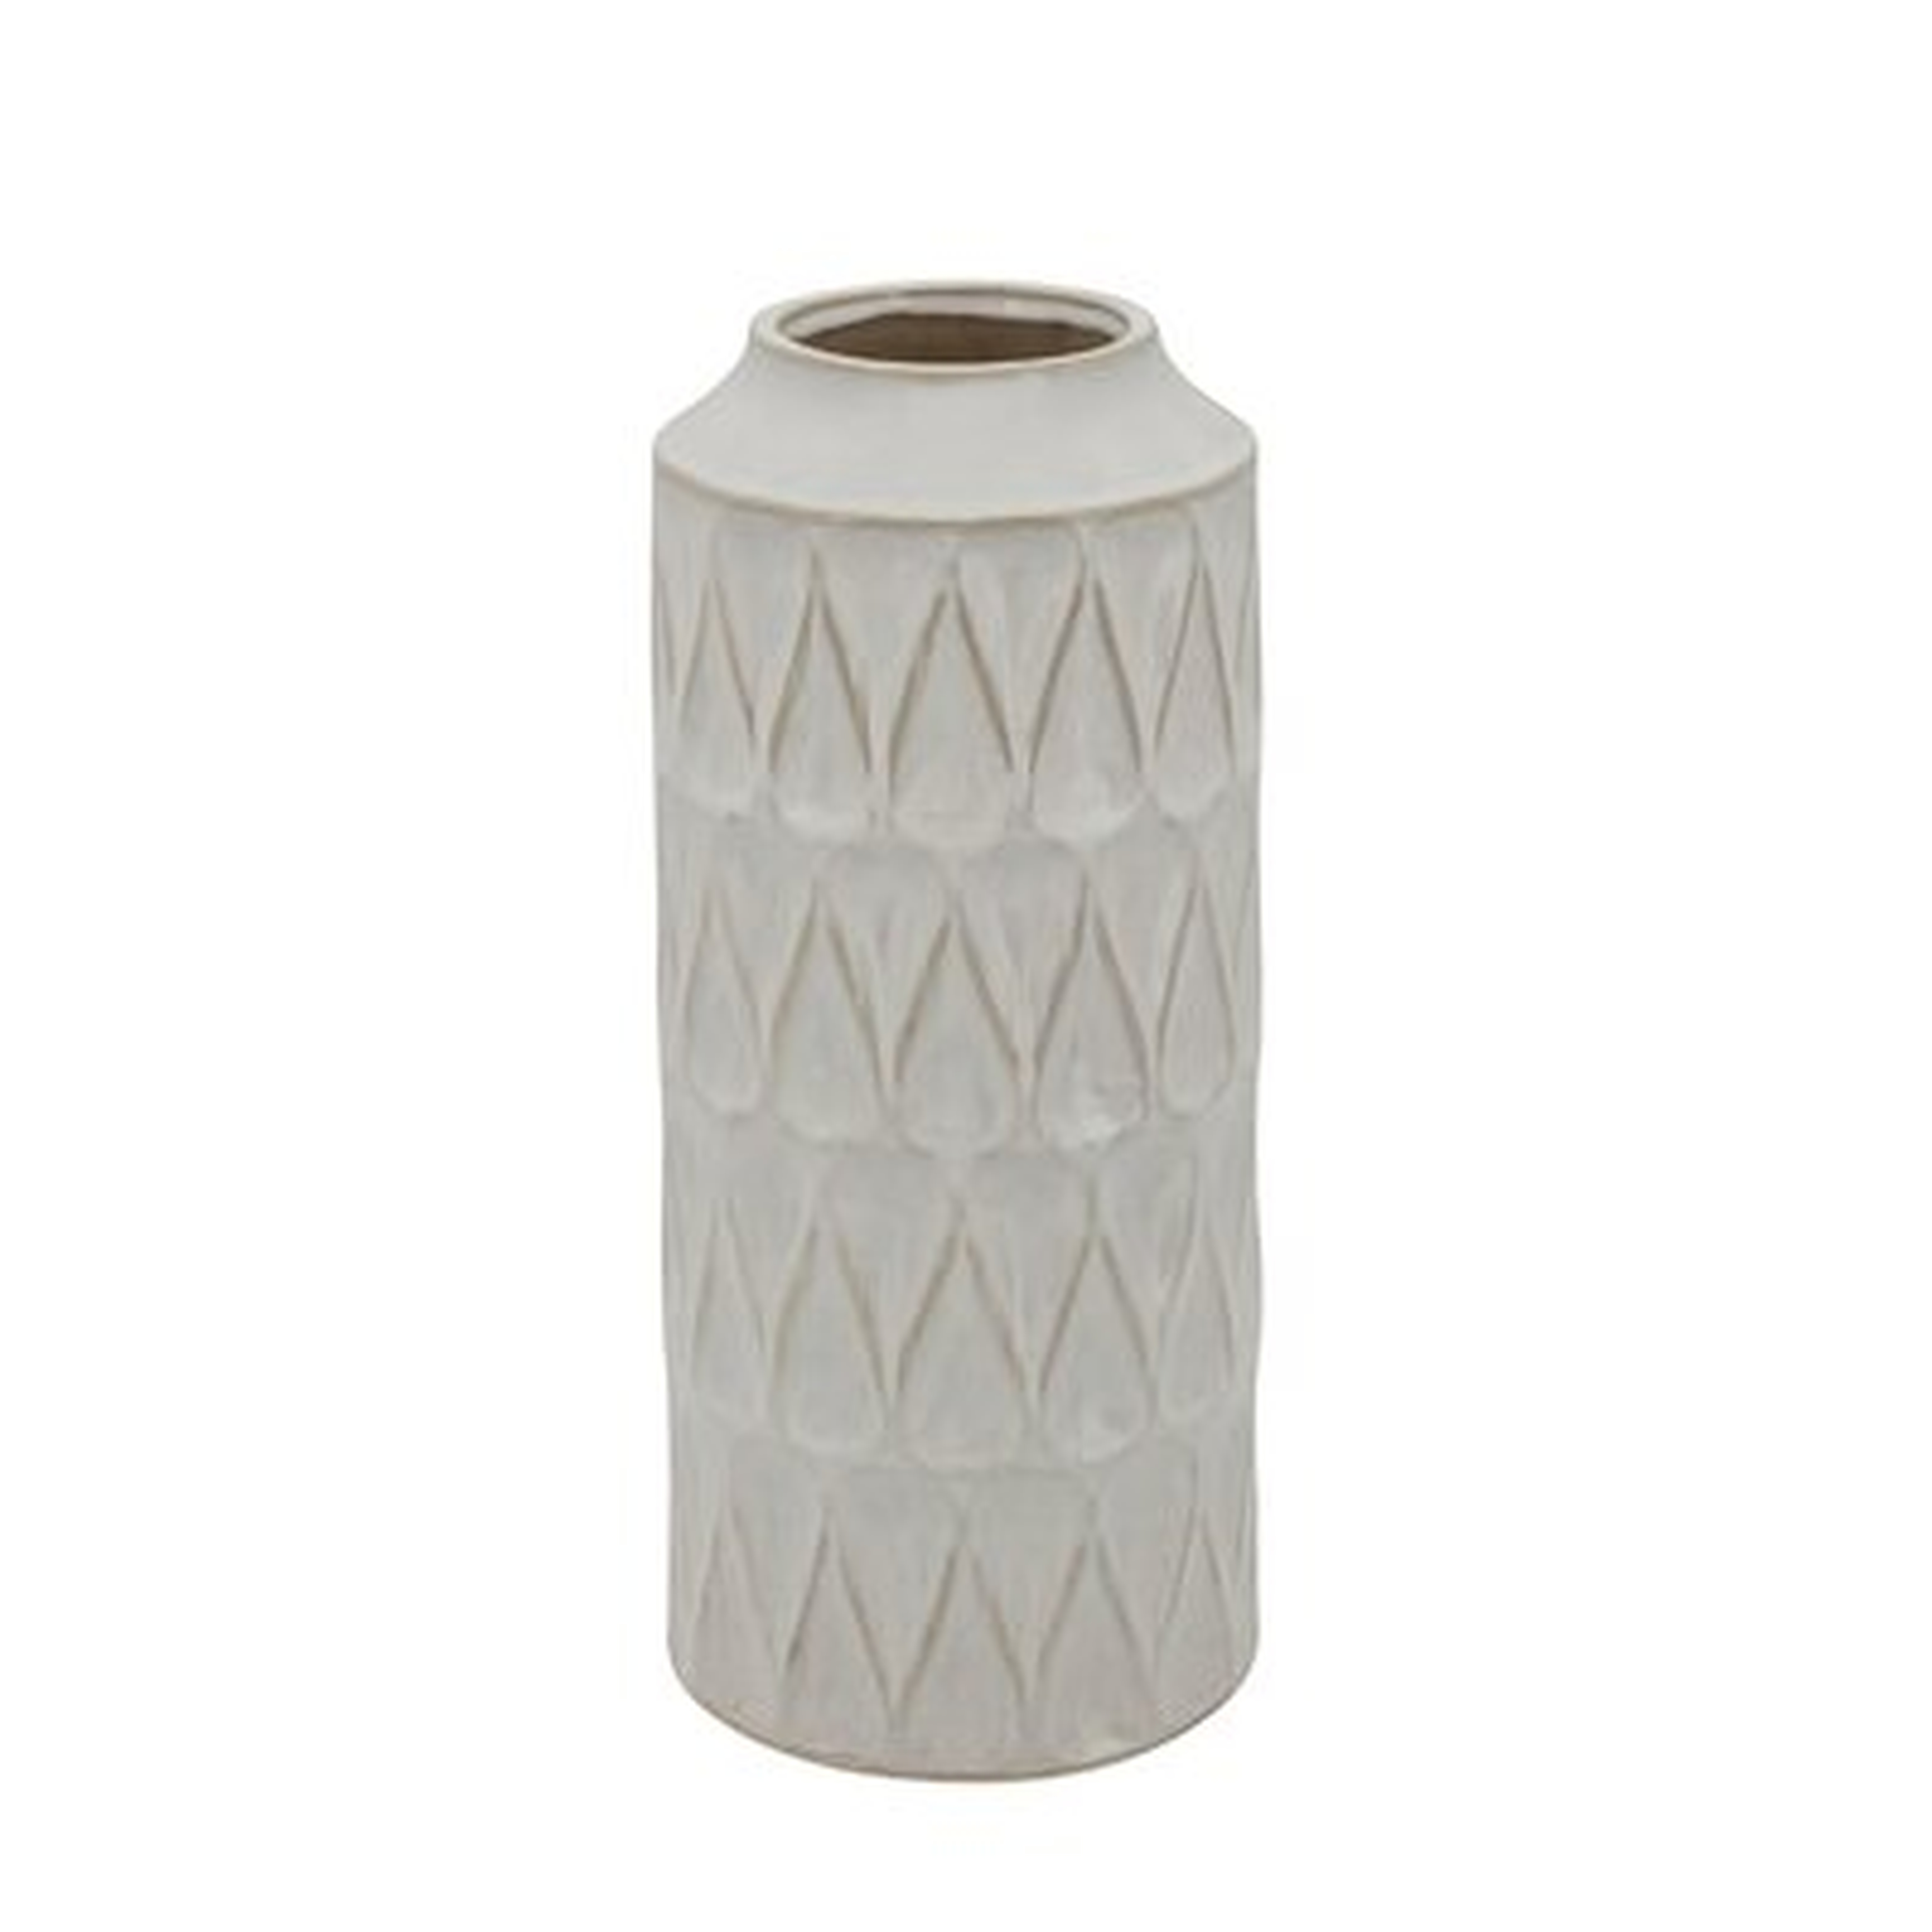 Mcfall White Ceramic Table Vase - Wayfair